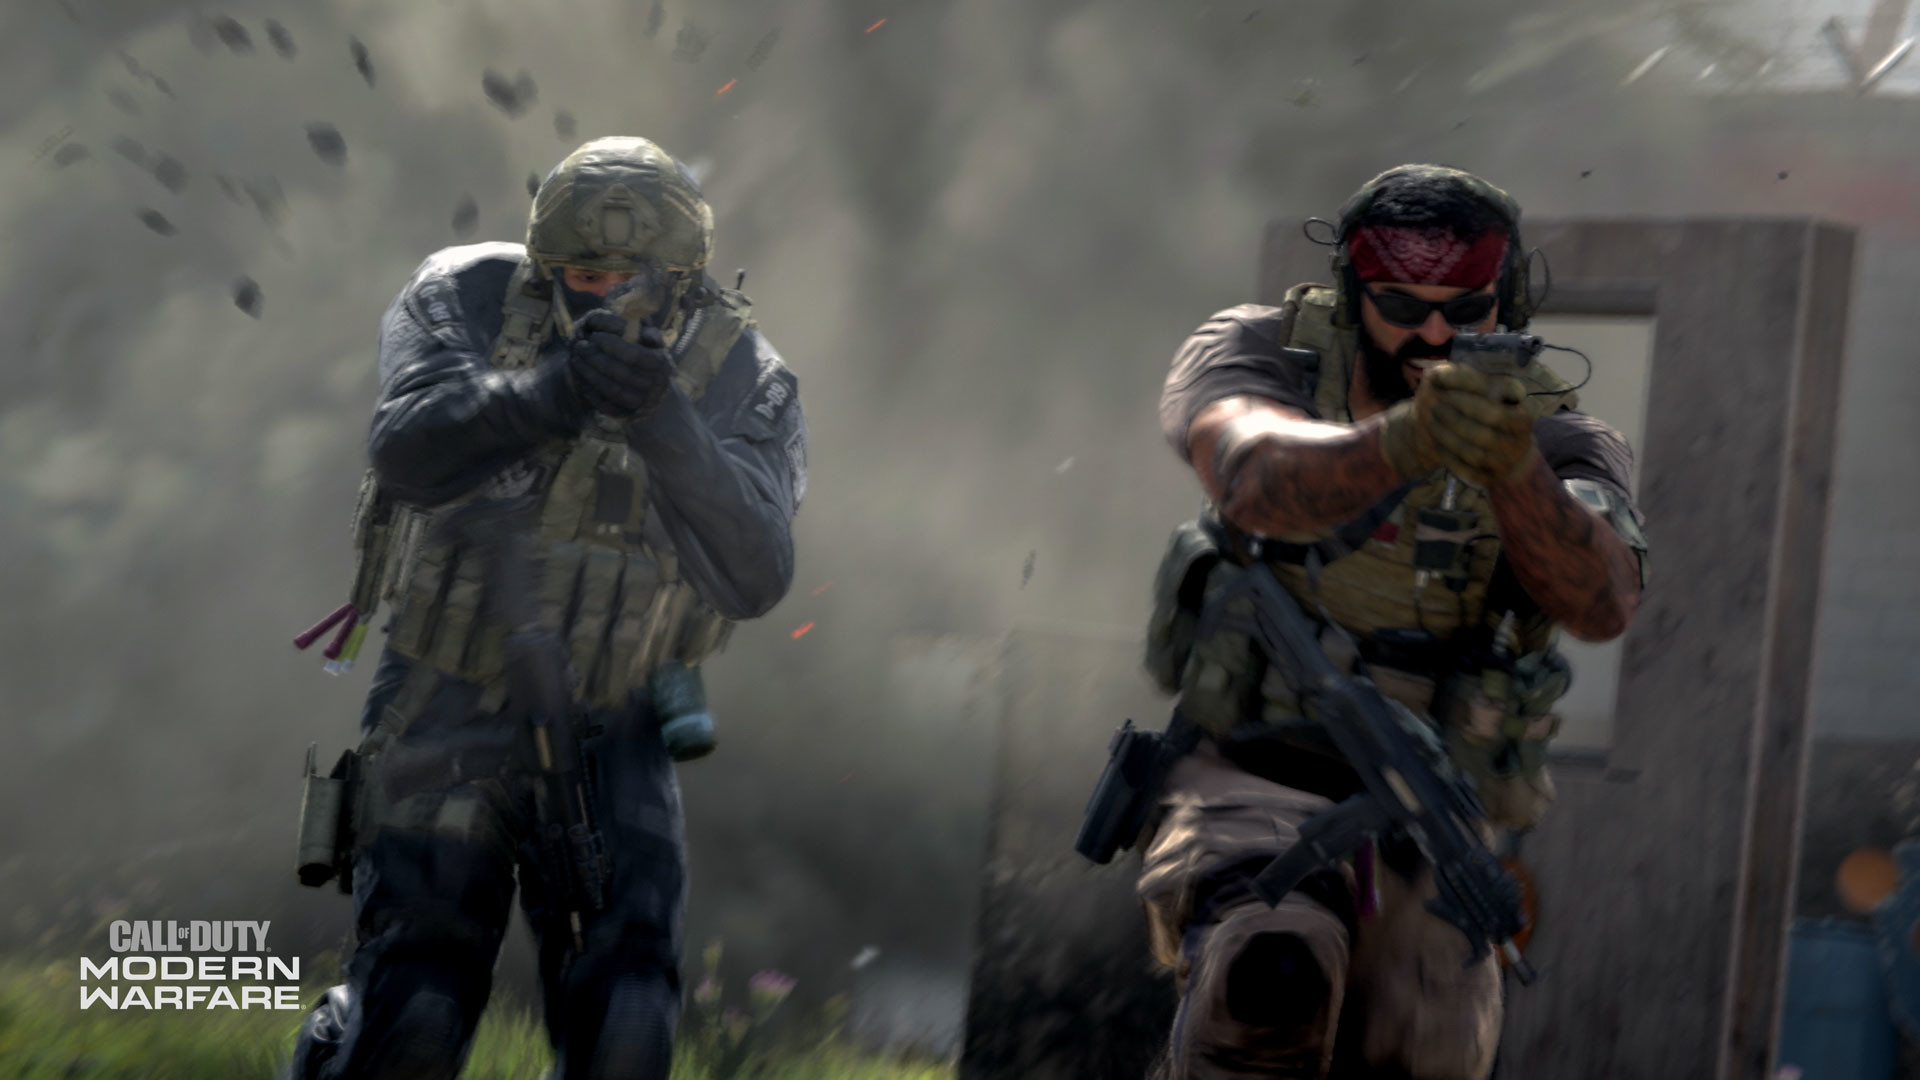 Call Of Duty: WWII PC Beta Release Date, Minimum Specs Announced